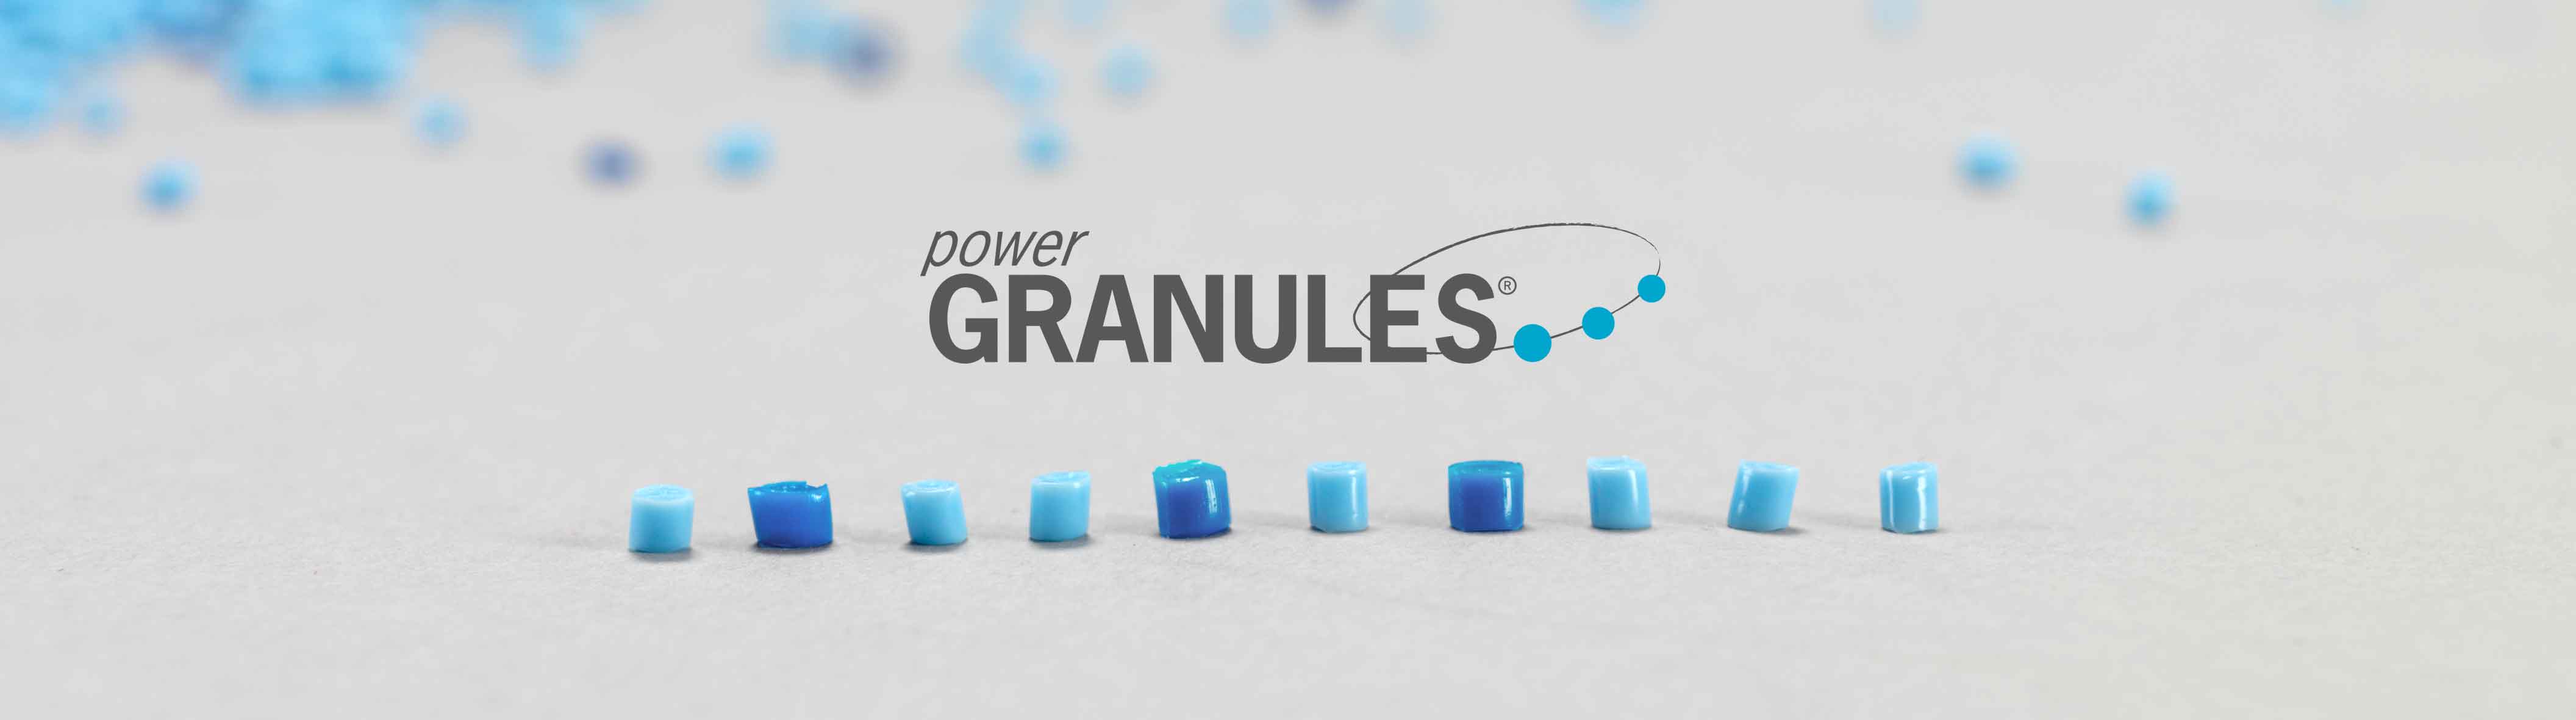 powergranules logo